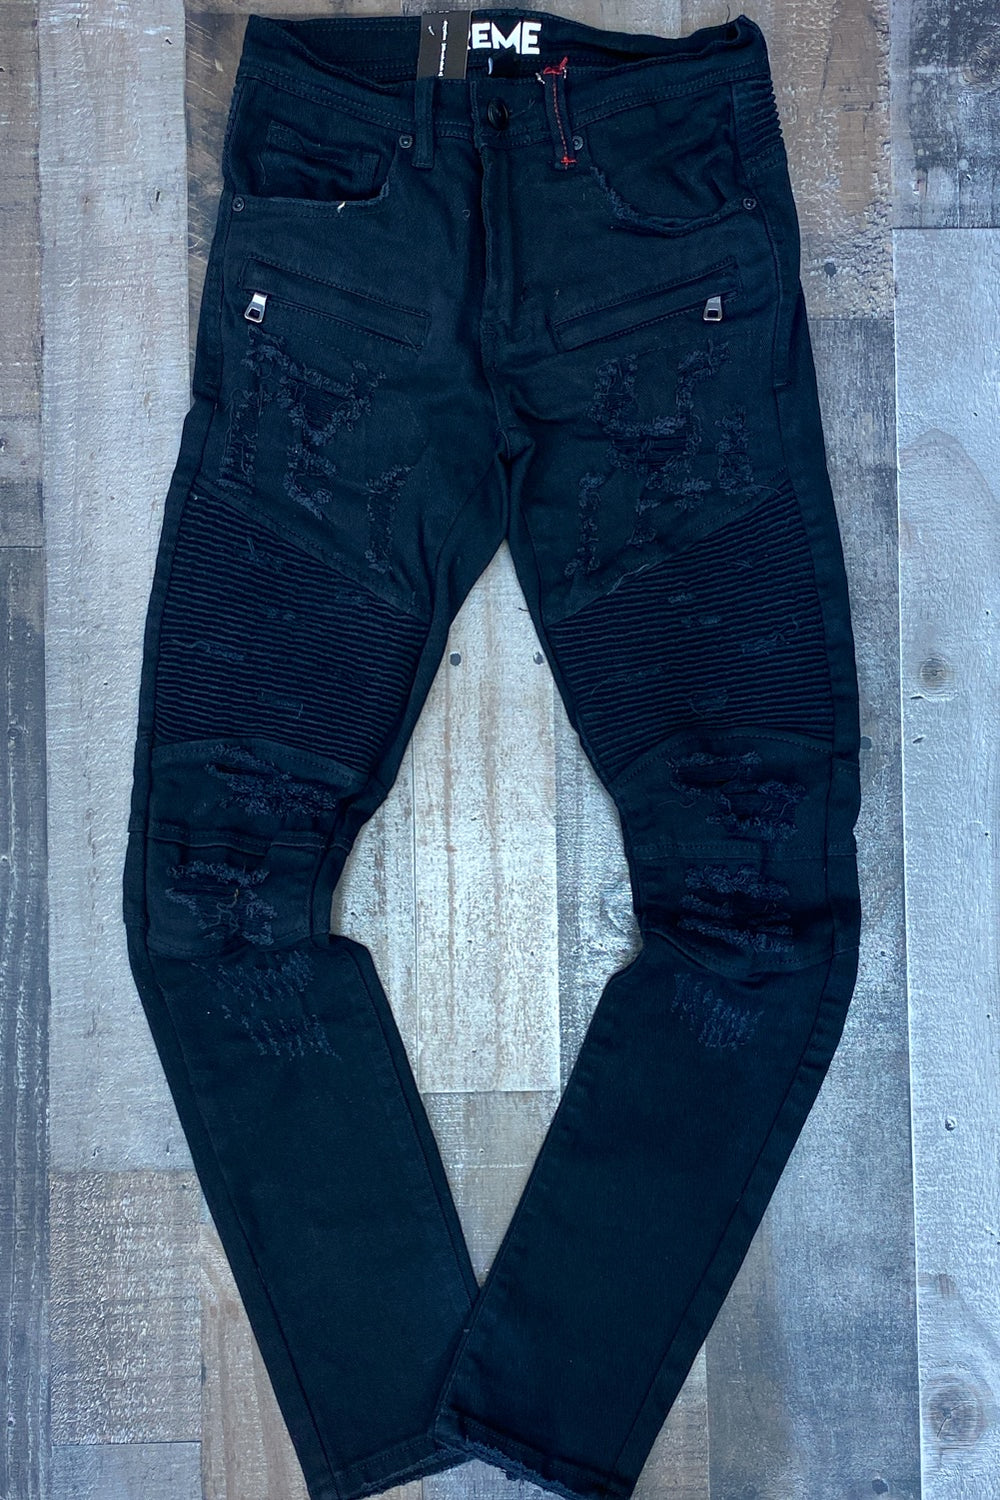 Preme- woven bottom denim jeans